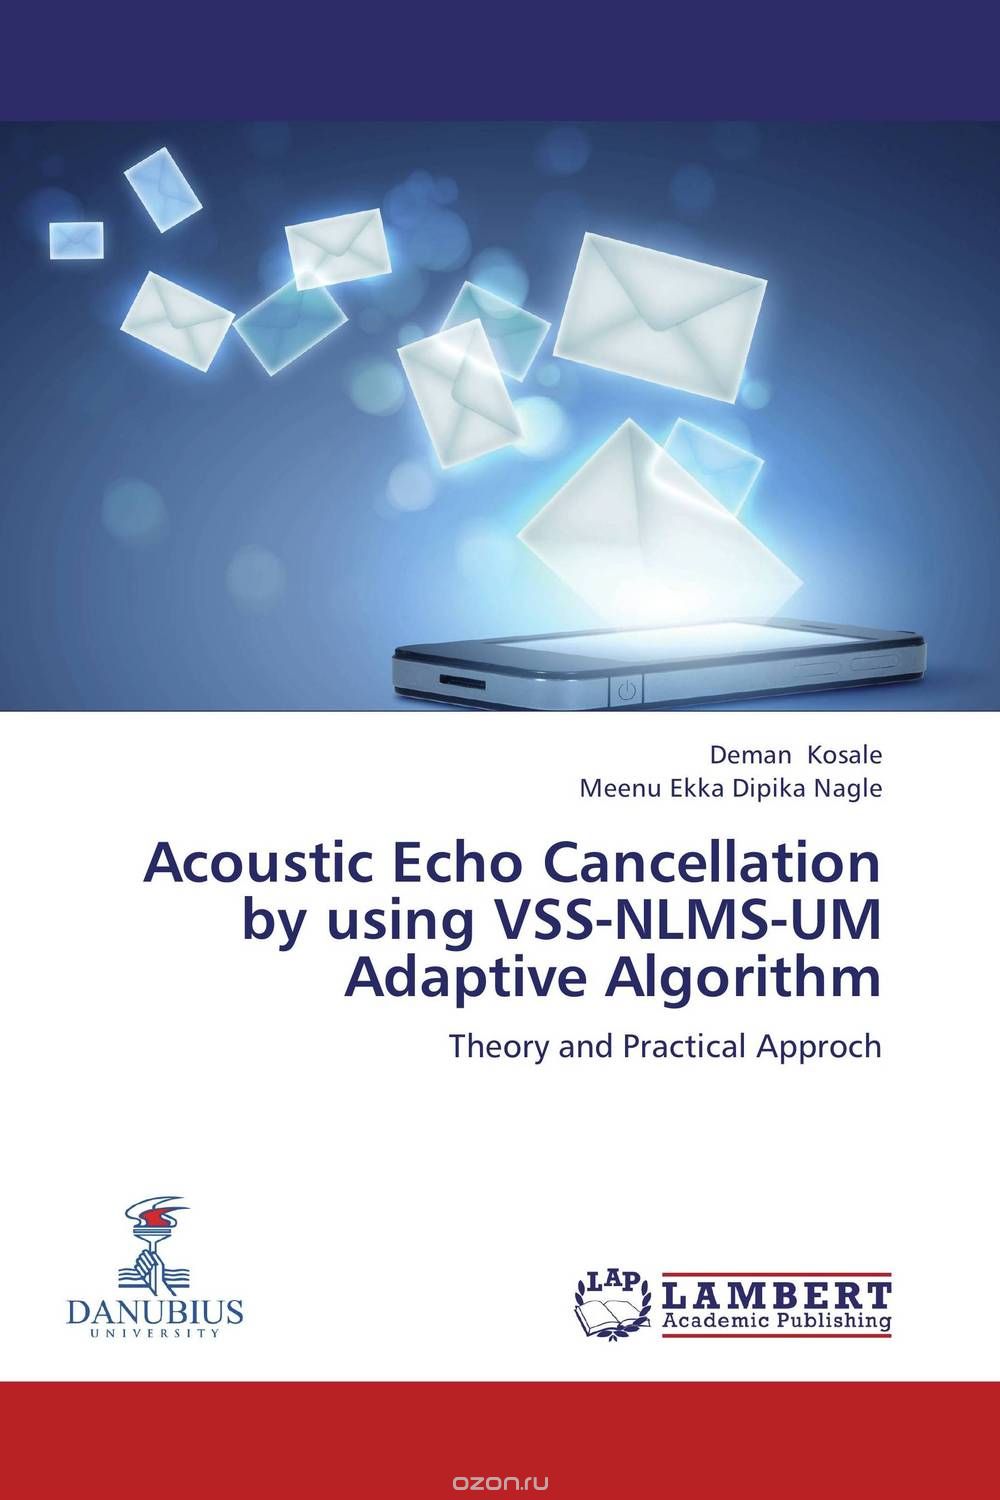 Скачать книгу "Acoustic Echo Cancellation by using VSS-NLMS-UM Adaptive Algorithm"